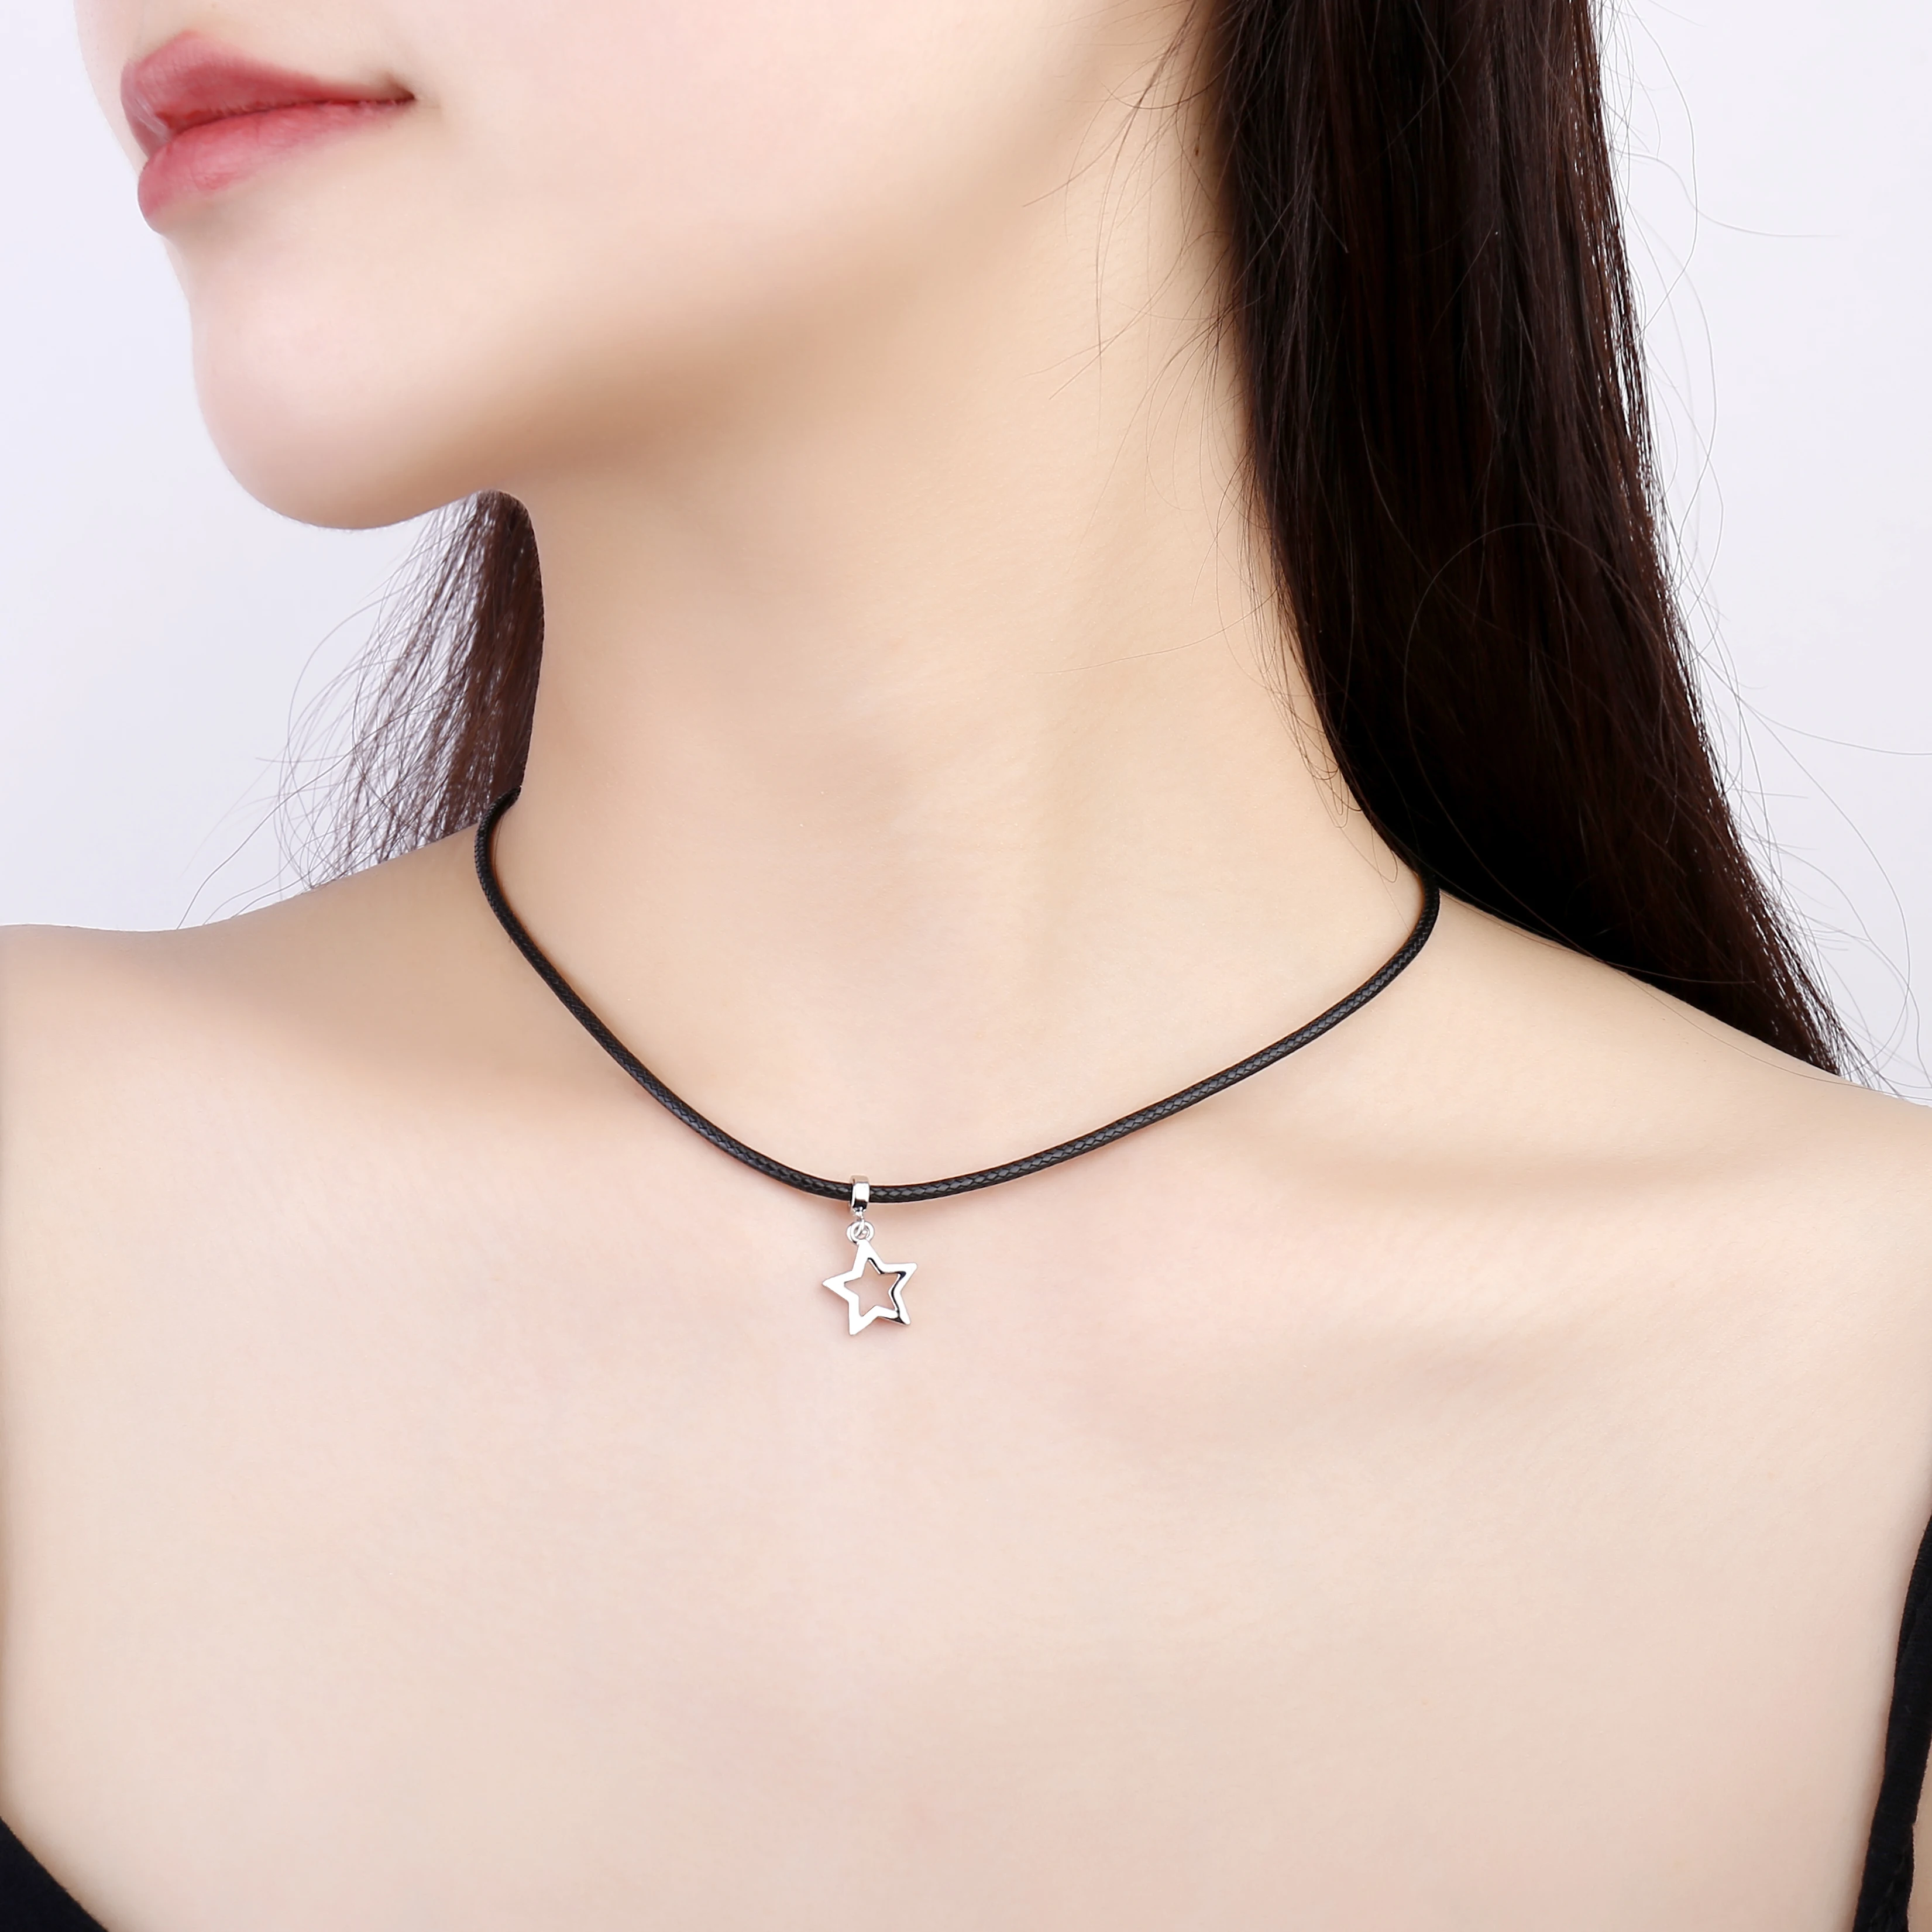 Black Leather Little Star Pendant Necklace  Colour Classic Charm Statement Chocker Collar Fashion Jewelry For Women Kolye